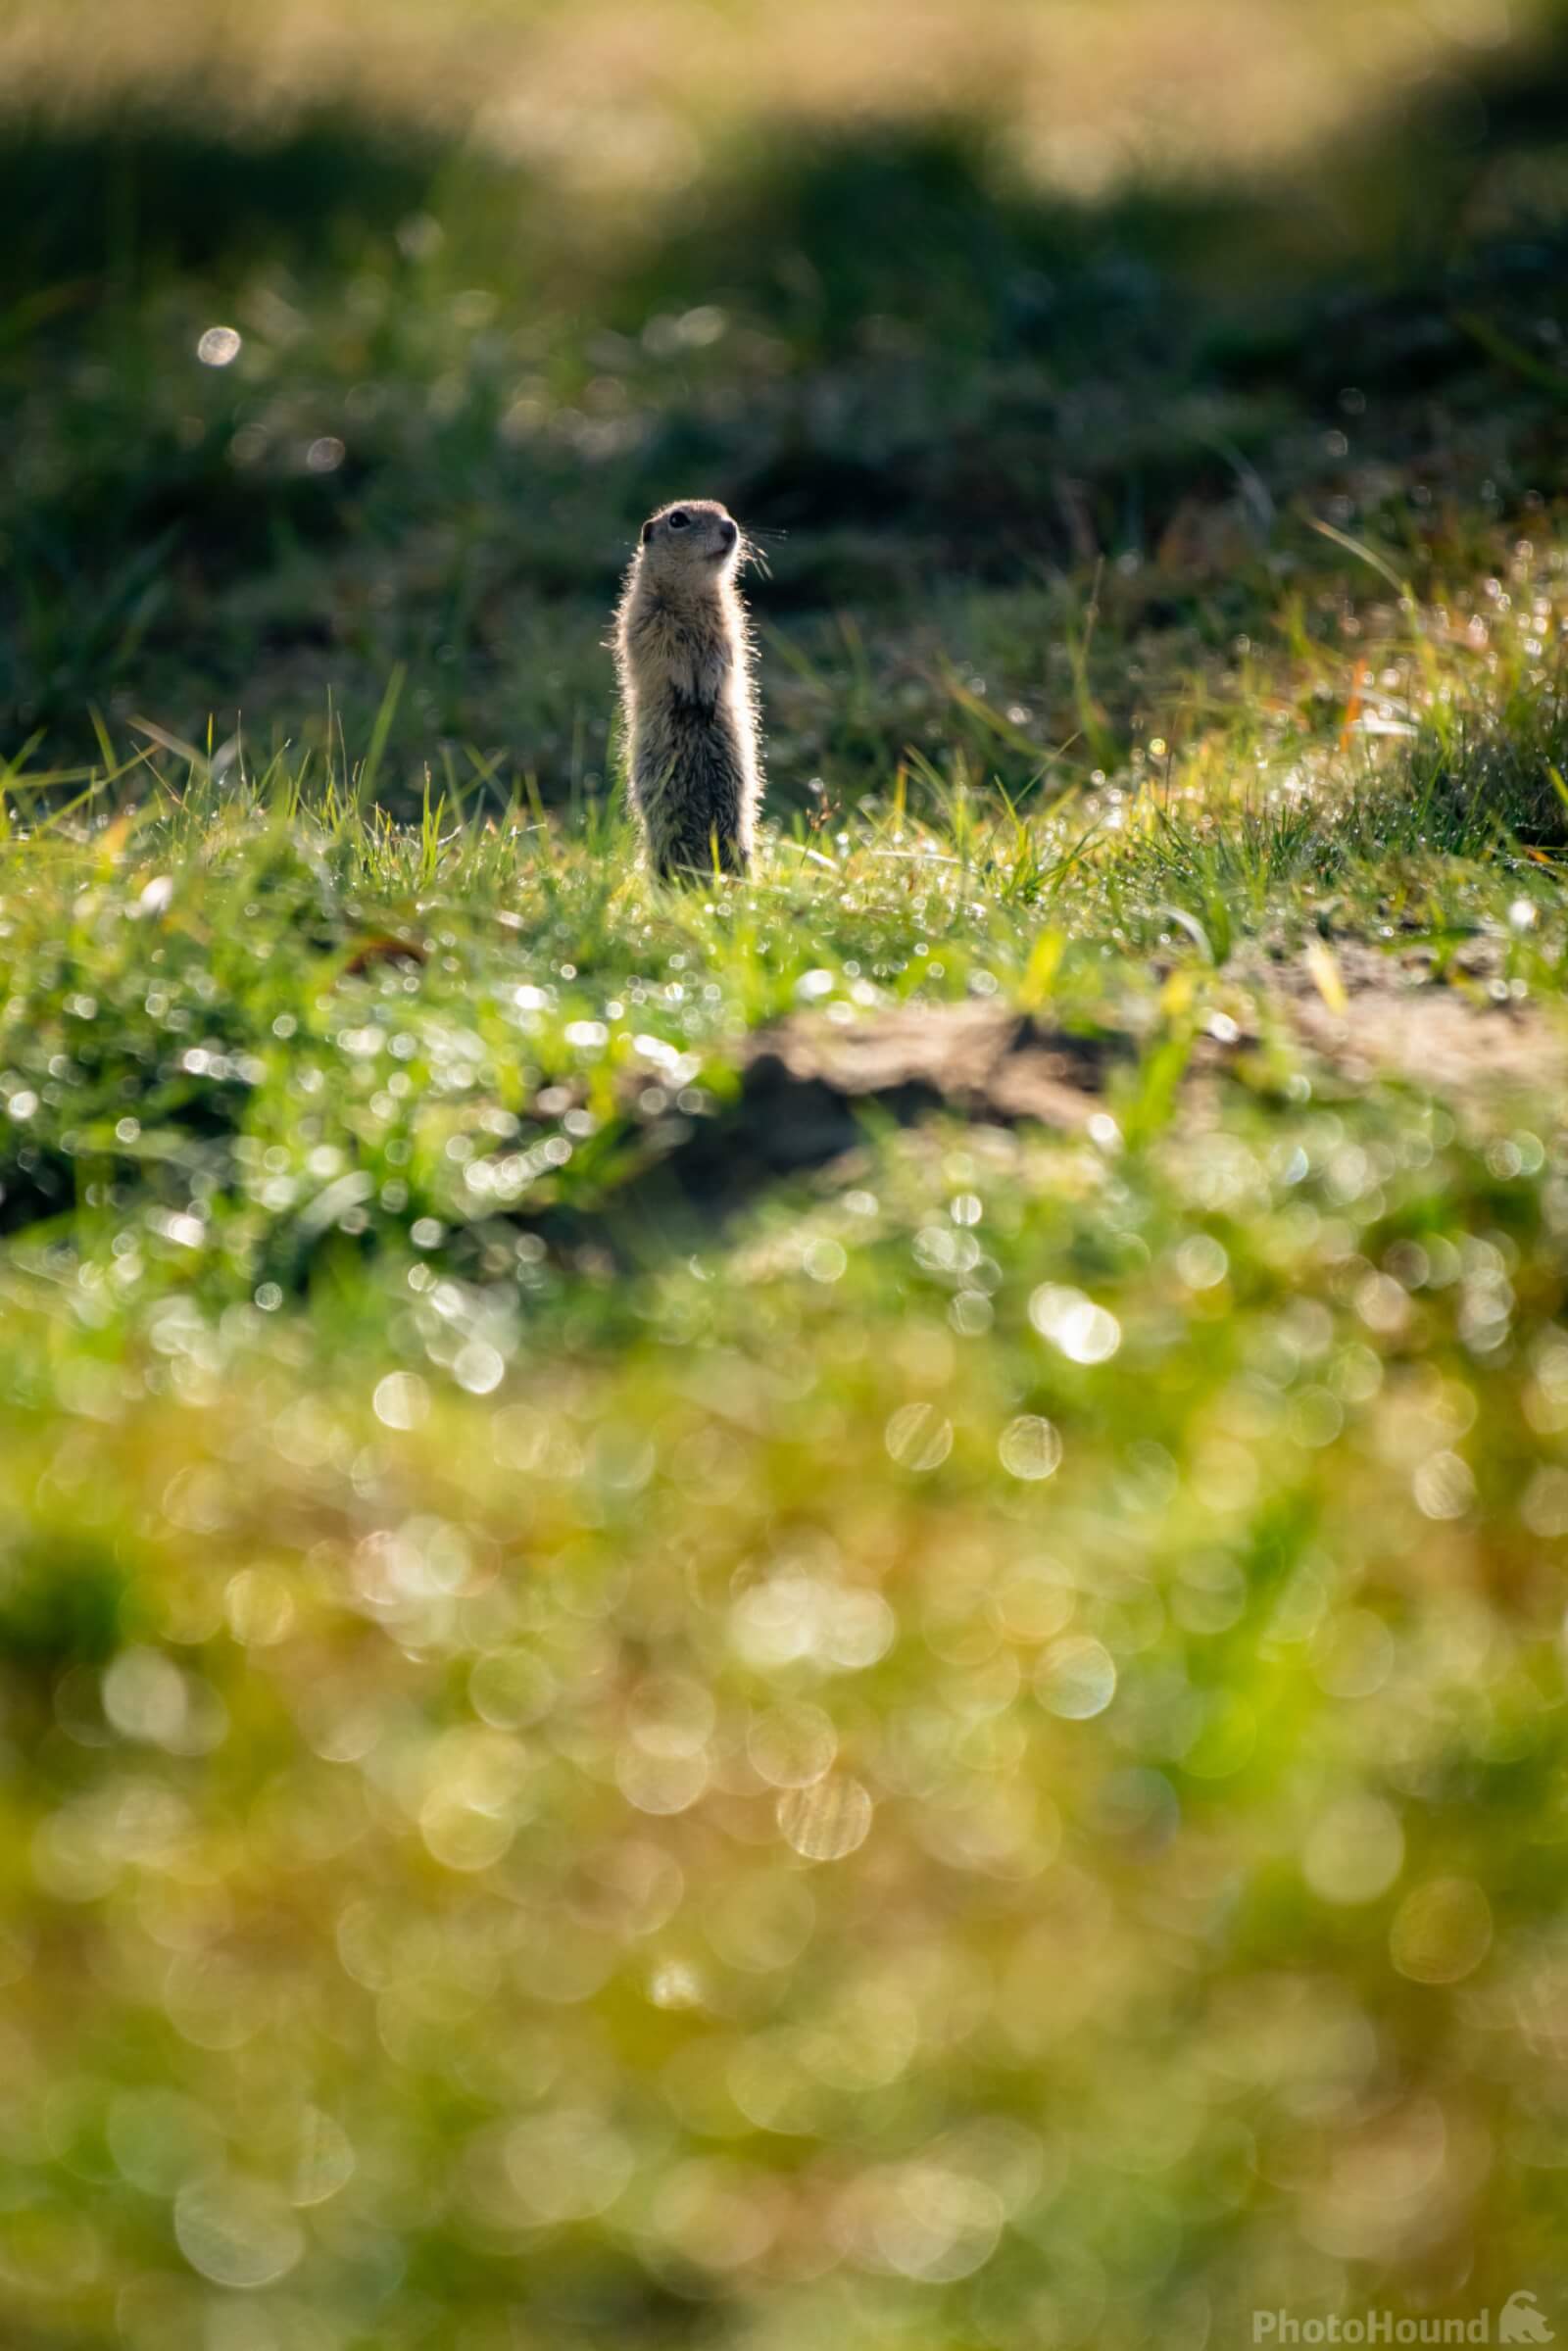 Image of Radouč European ground squirrel colony by VOJTa Herout